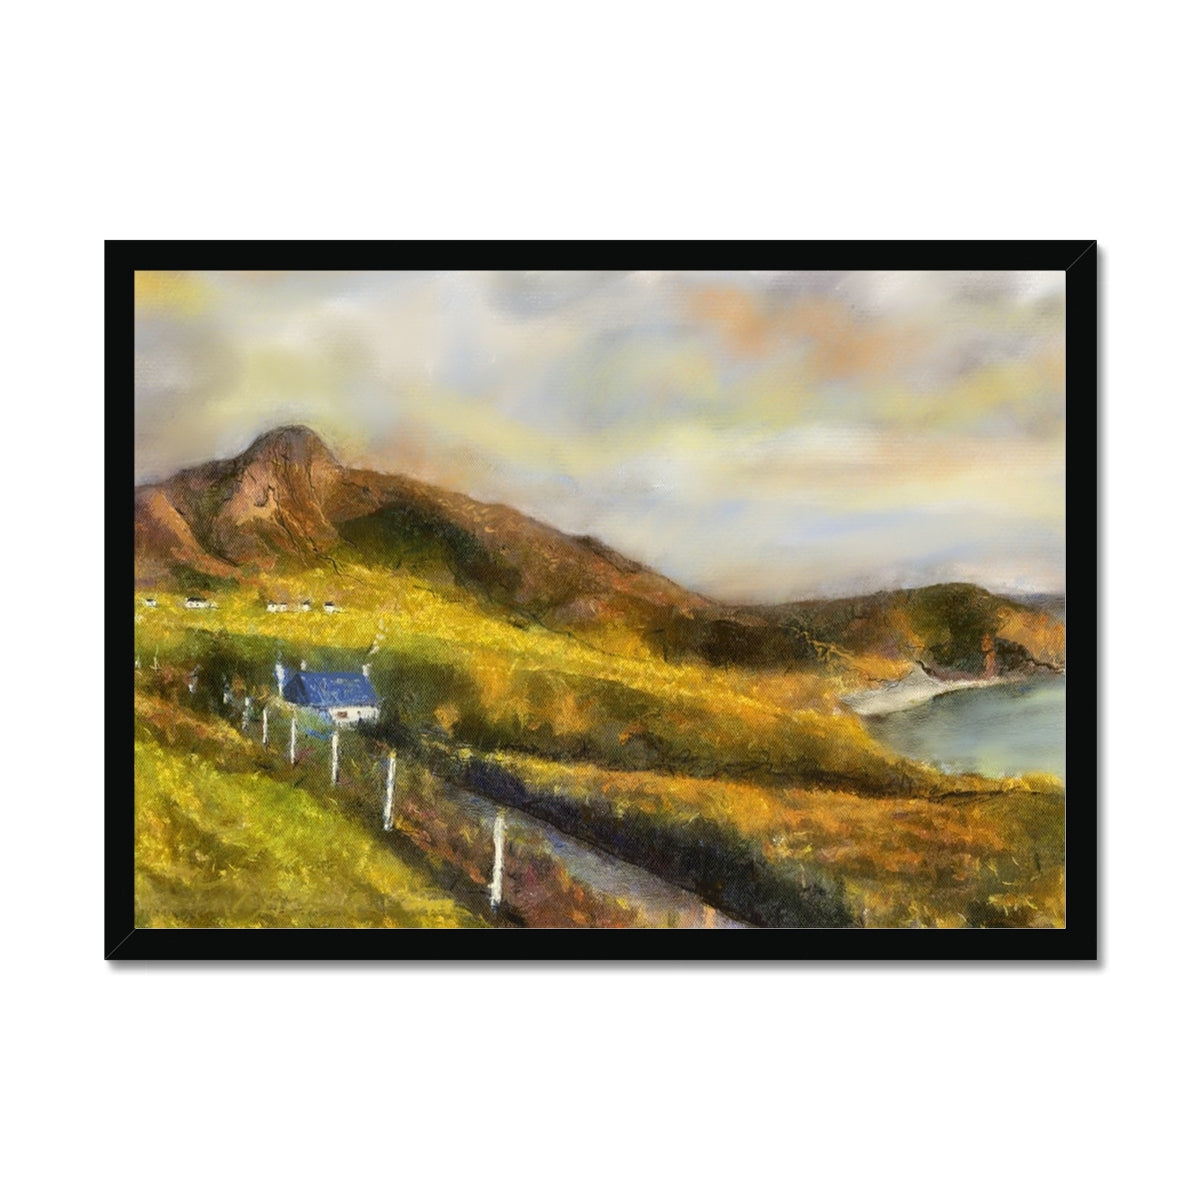 Coldbackie Painting | Framed Prints From Scotland-Framed Prints-Scottish Highlands & Lowlands Art Gallery-A2 Landscape-Black Frame-Paintings, Prints, Homeware, Art Gifts From Scotland By Scottish Artist Kevin Hunter